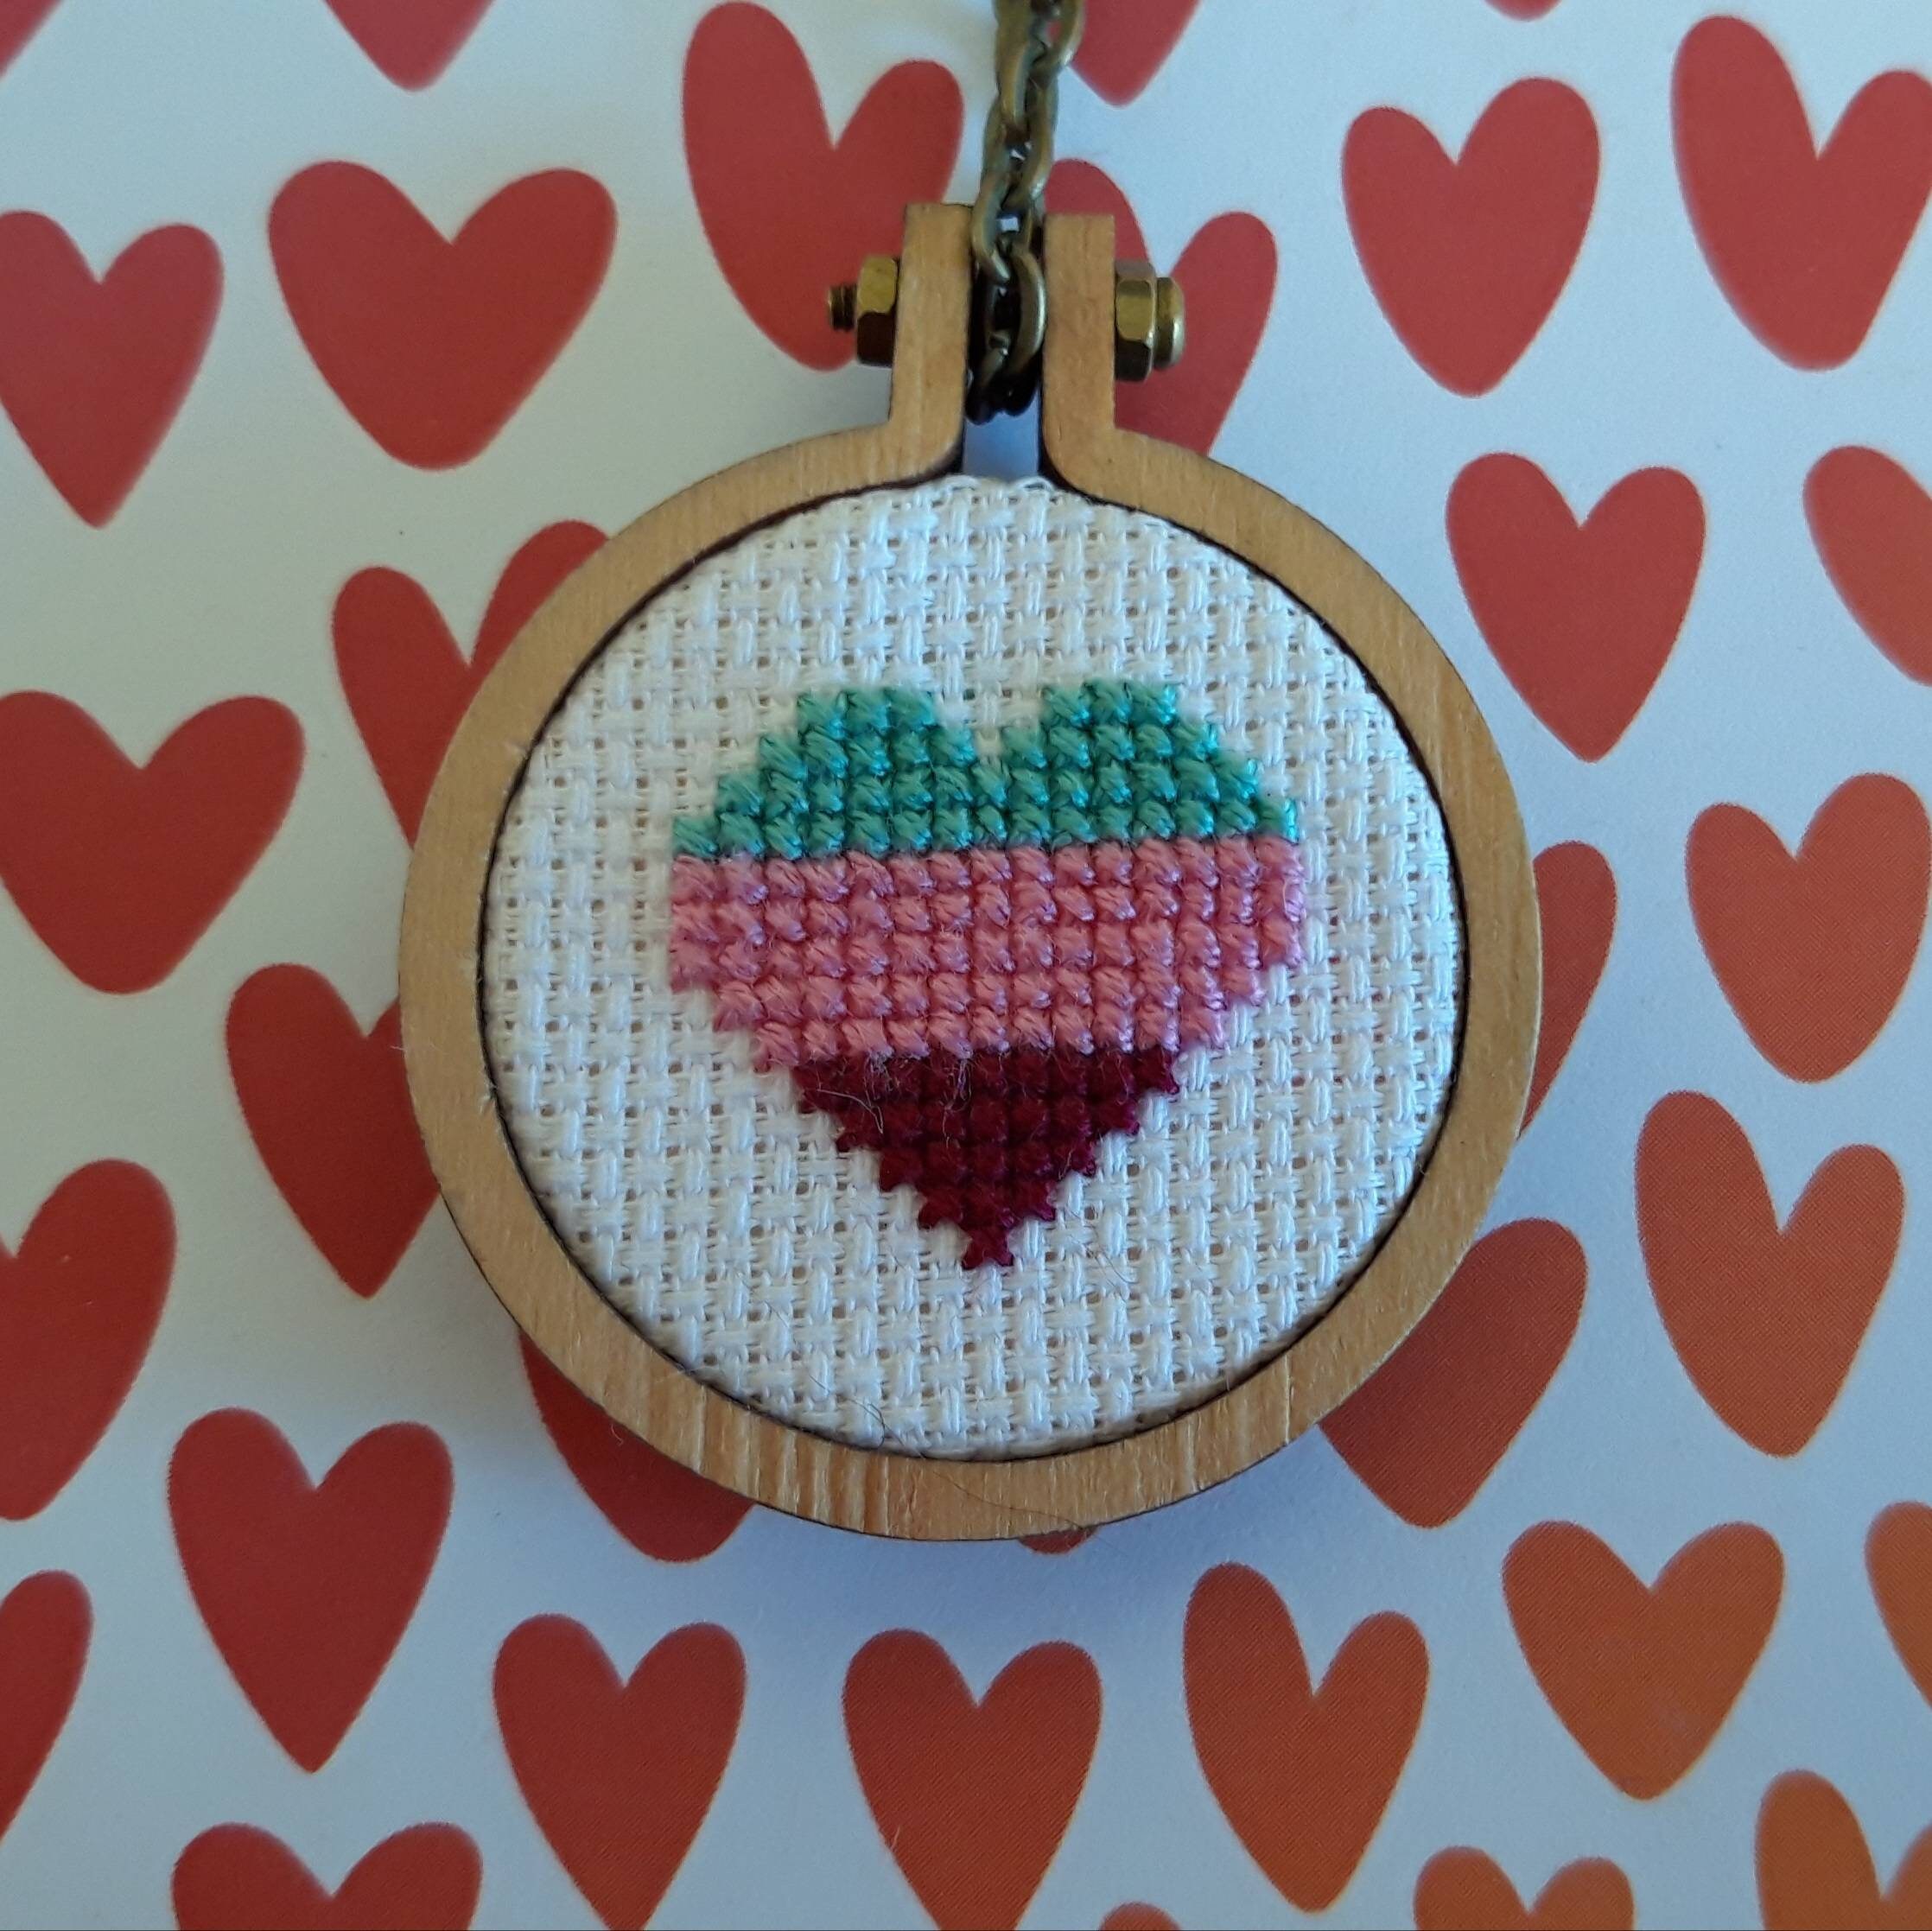 Cross Stitch Bookmark Kit Hearts 